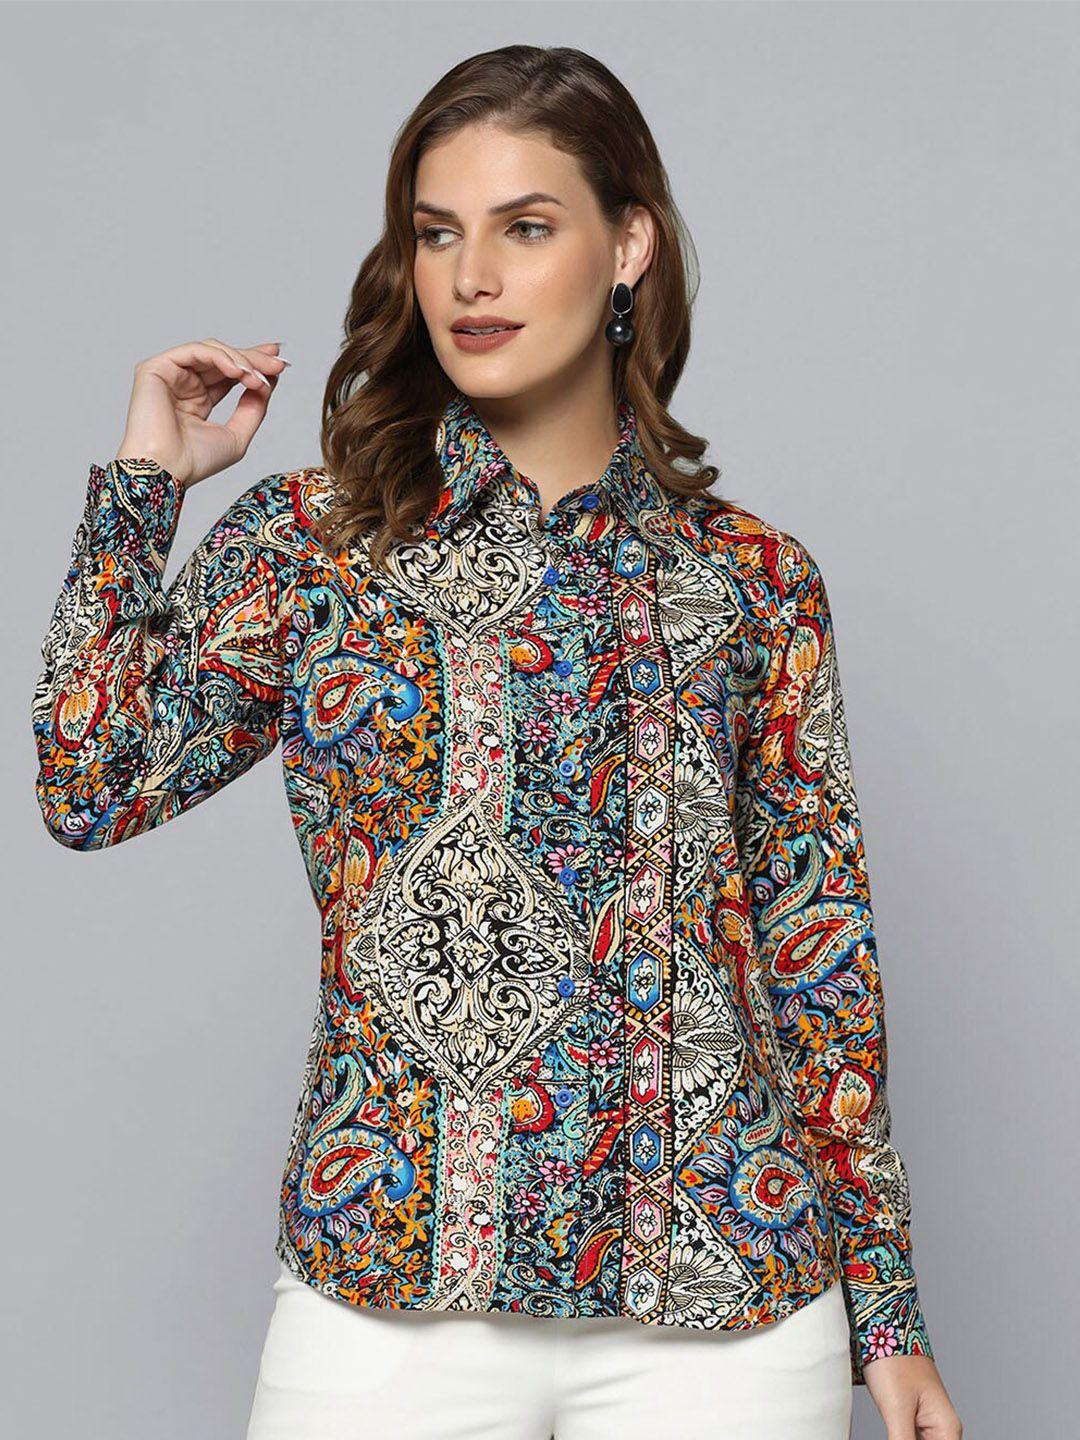 powersutra ethnic motifs printed casual shirt